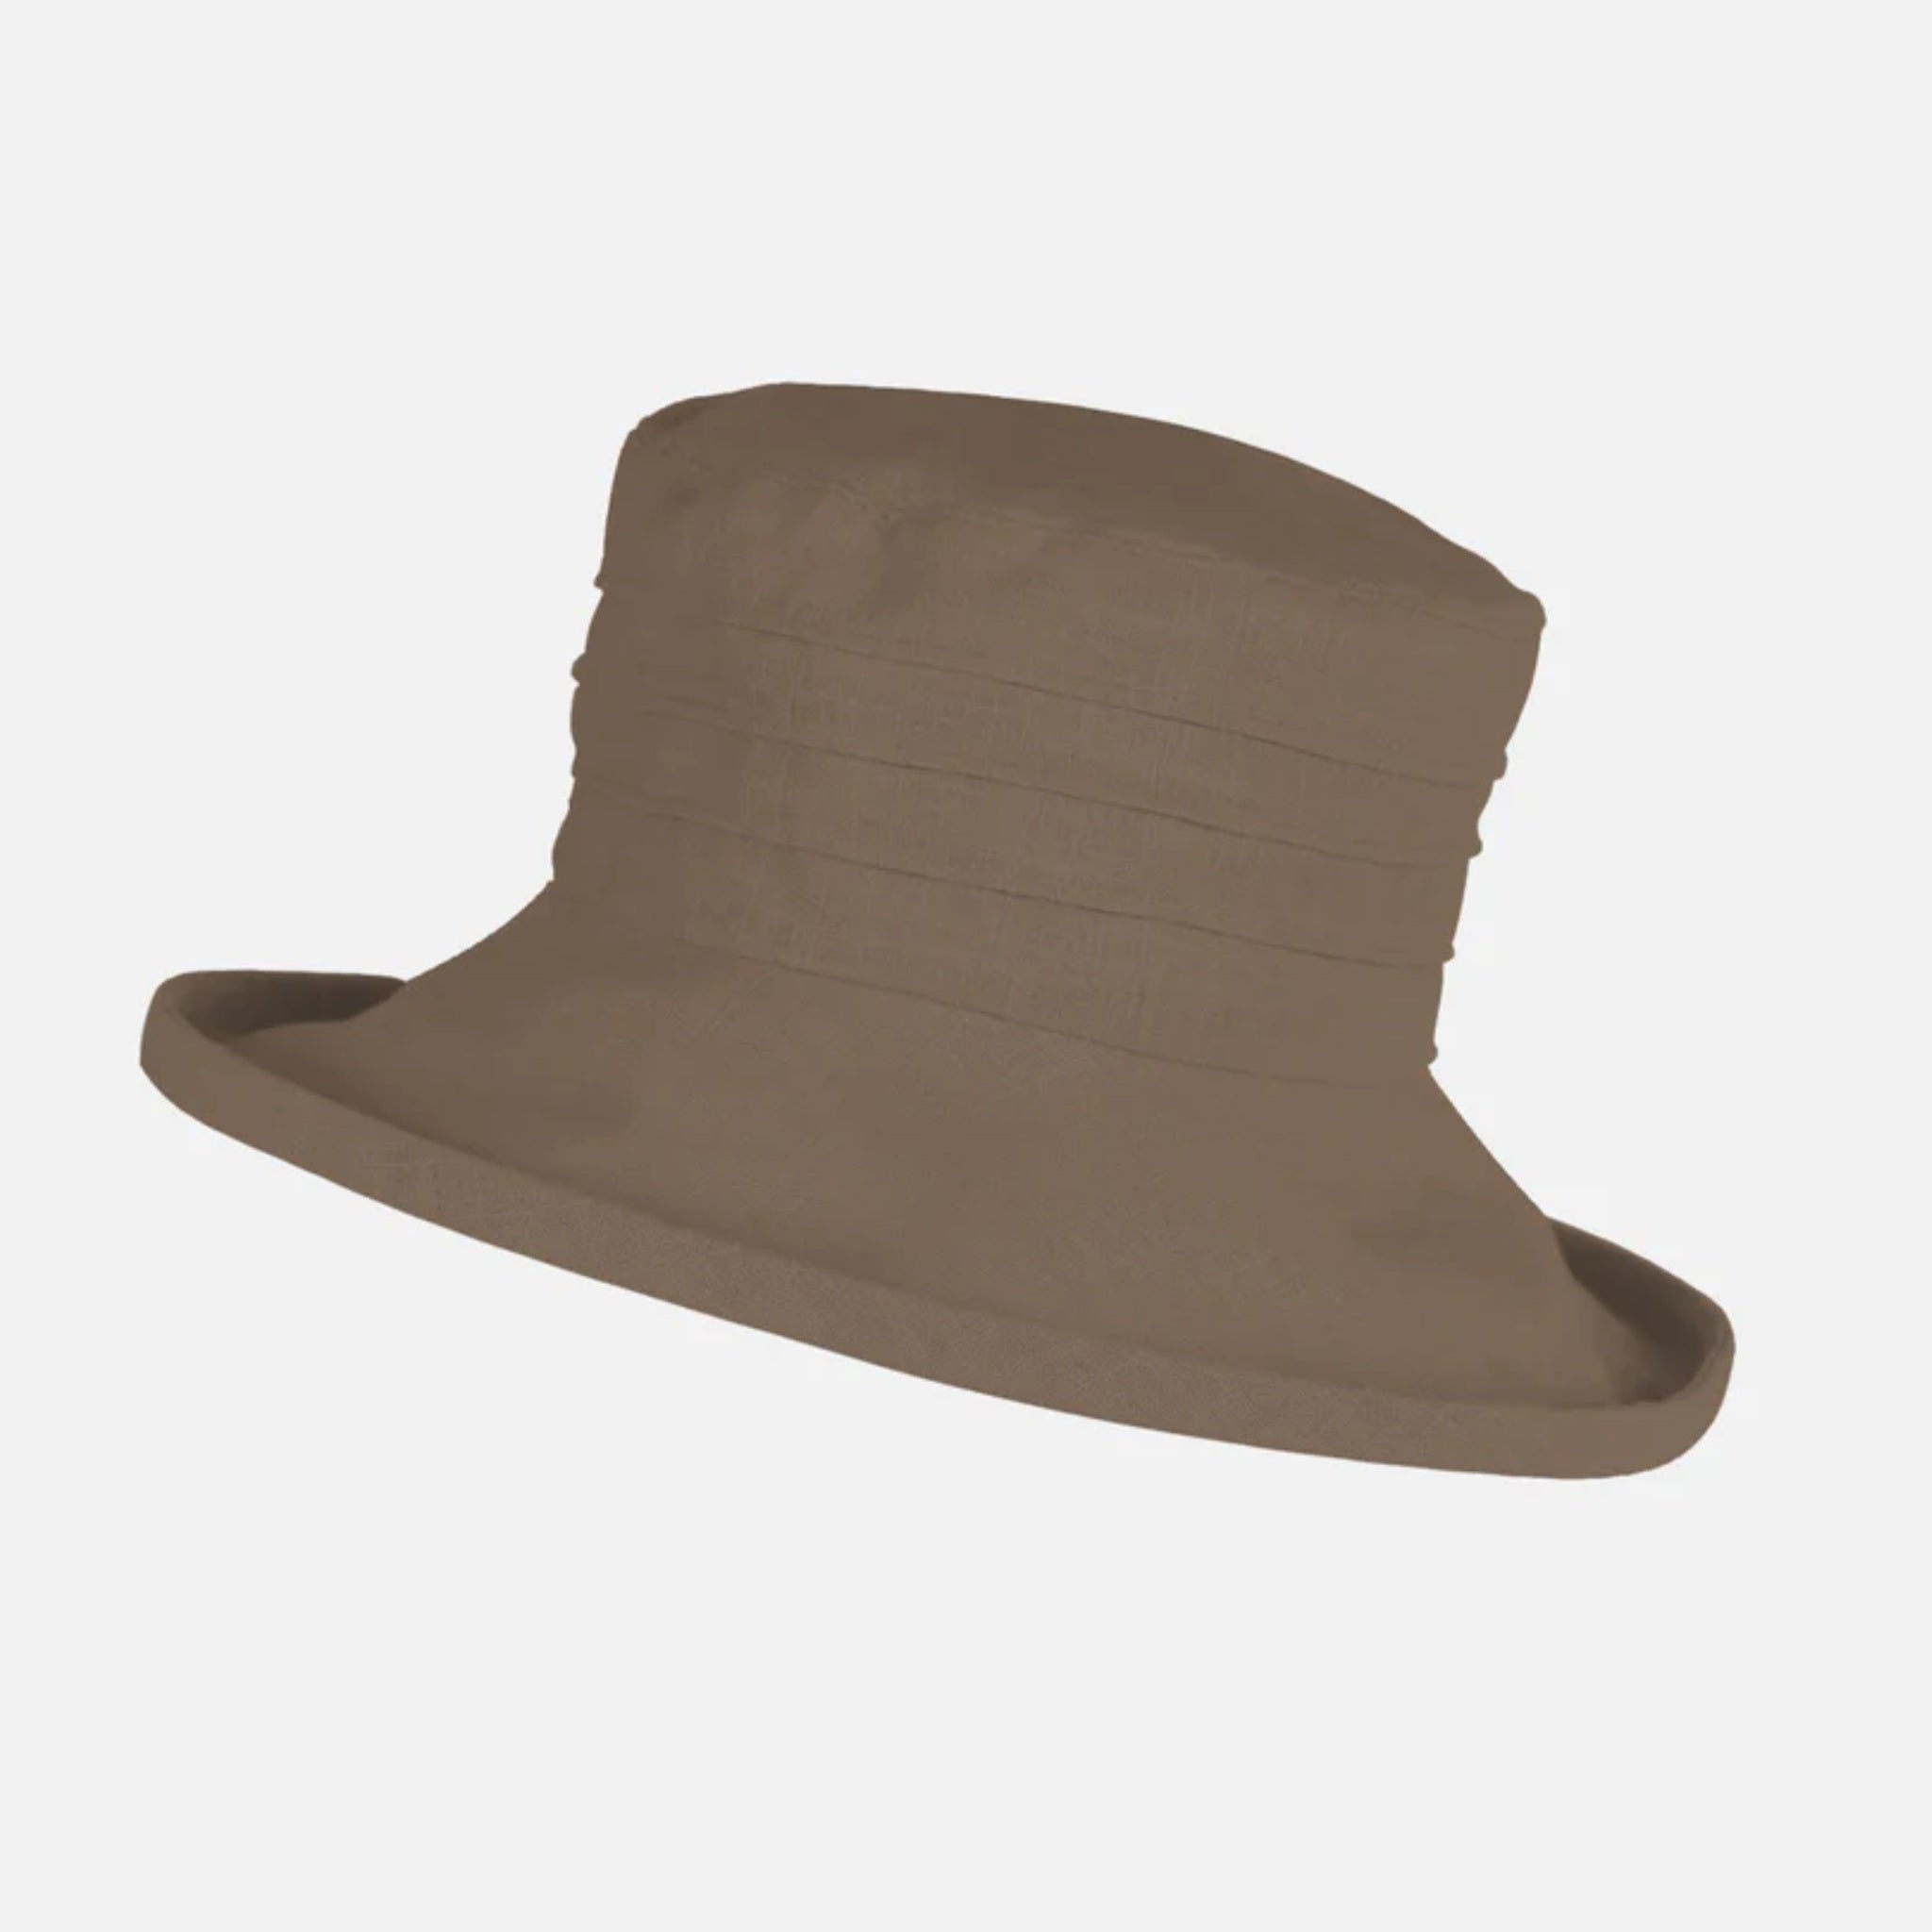 The Hat Shop Proppa Toppa Large Brim Packable Linen Sun Hat Dark Beige